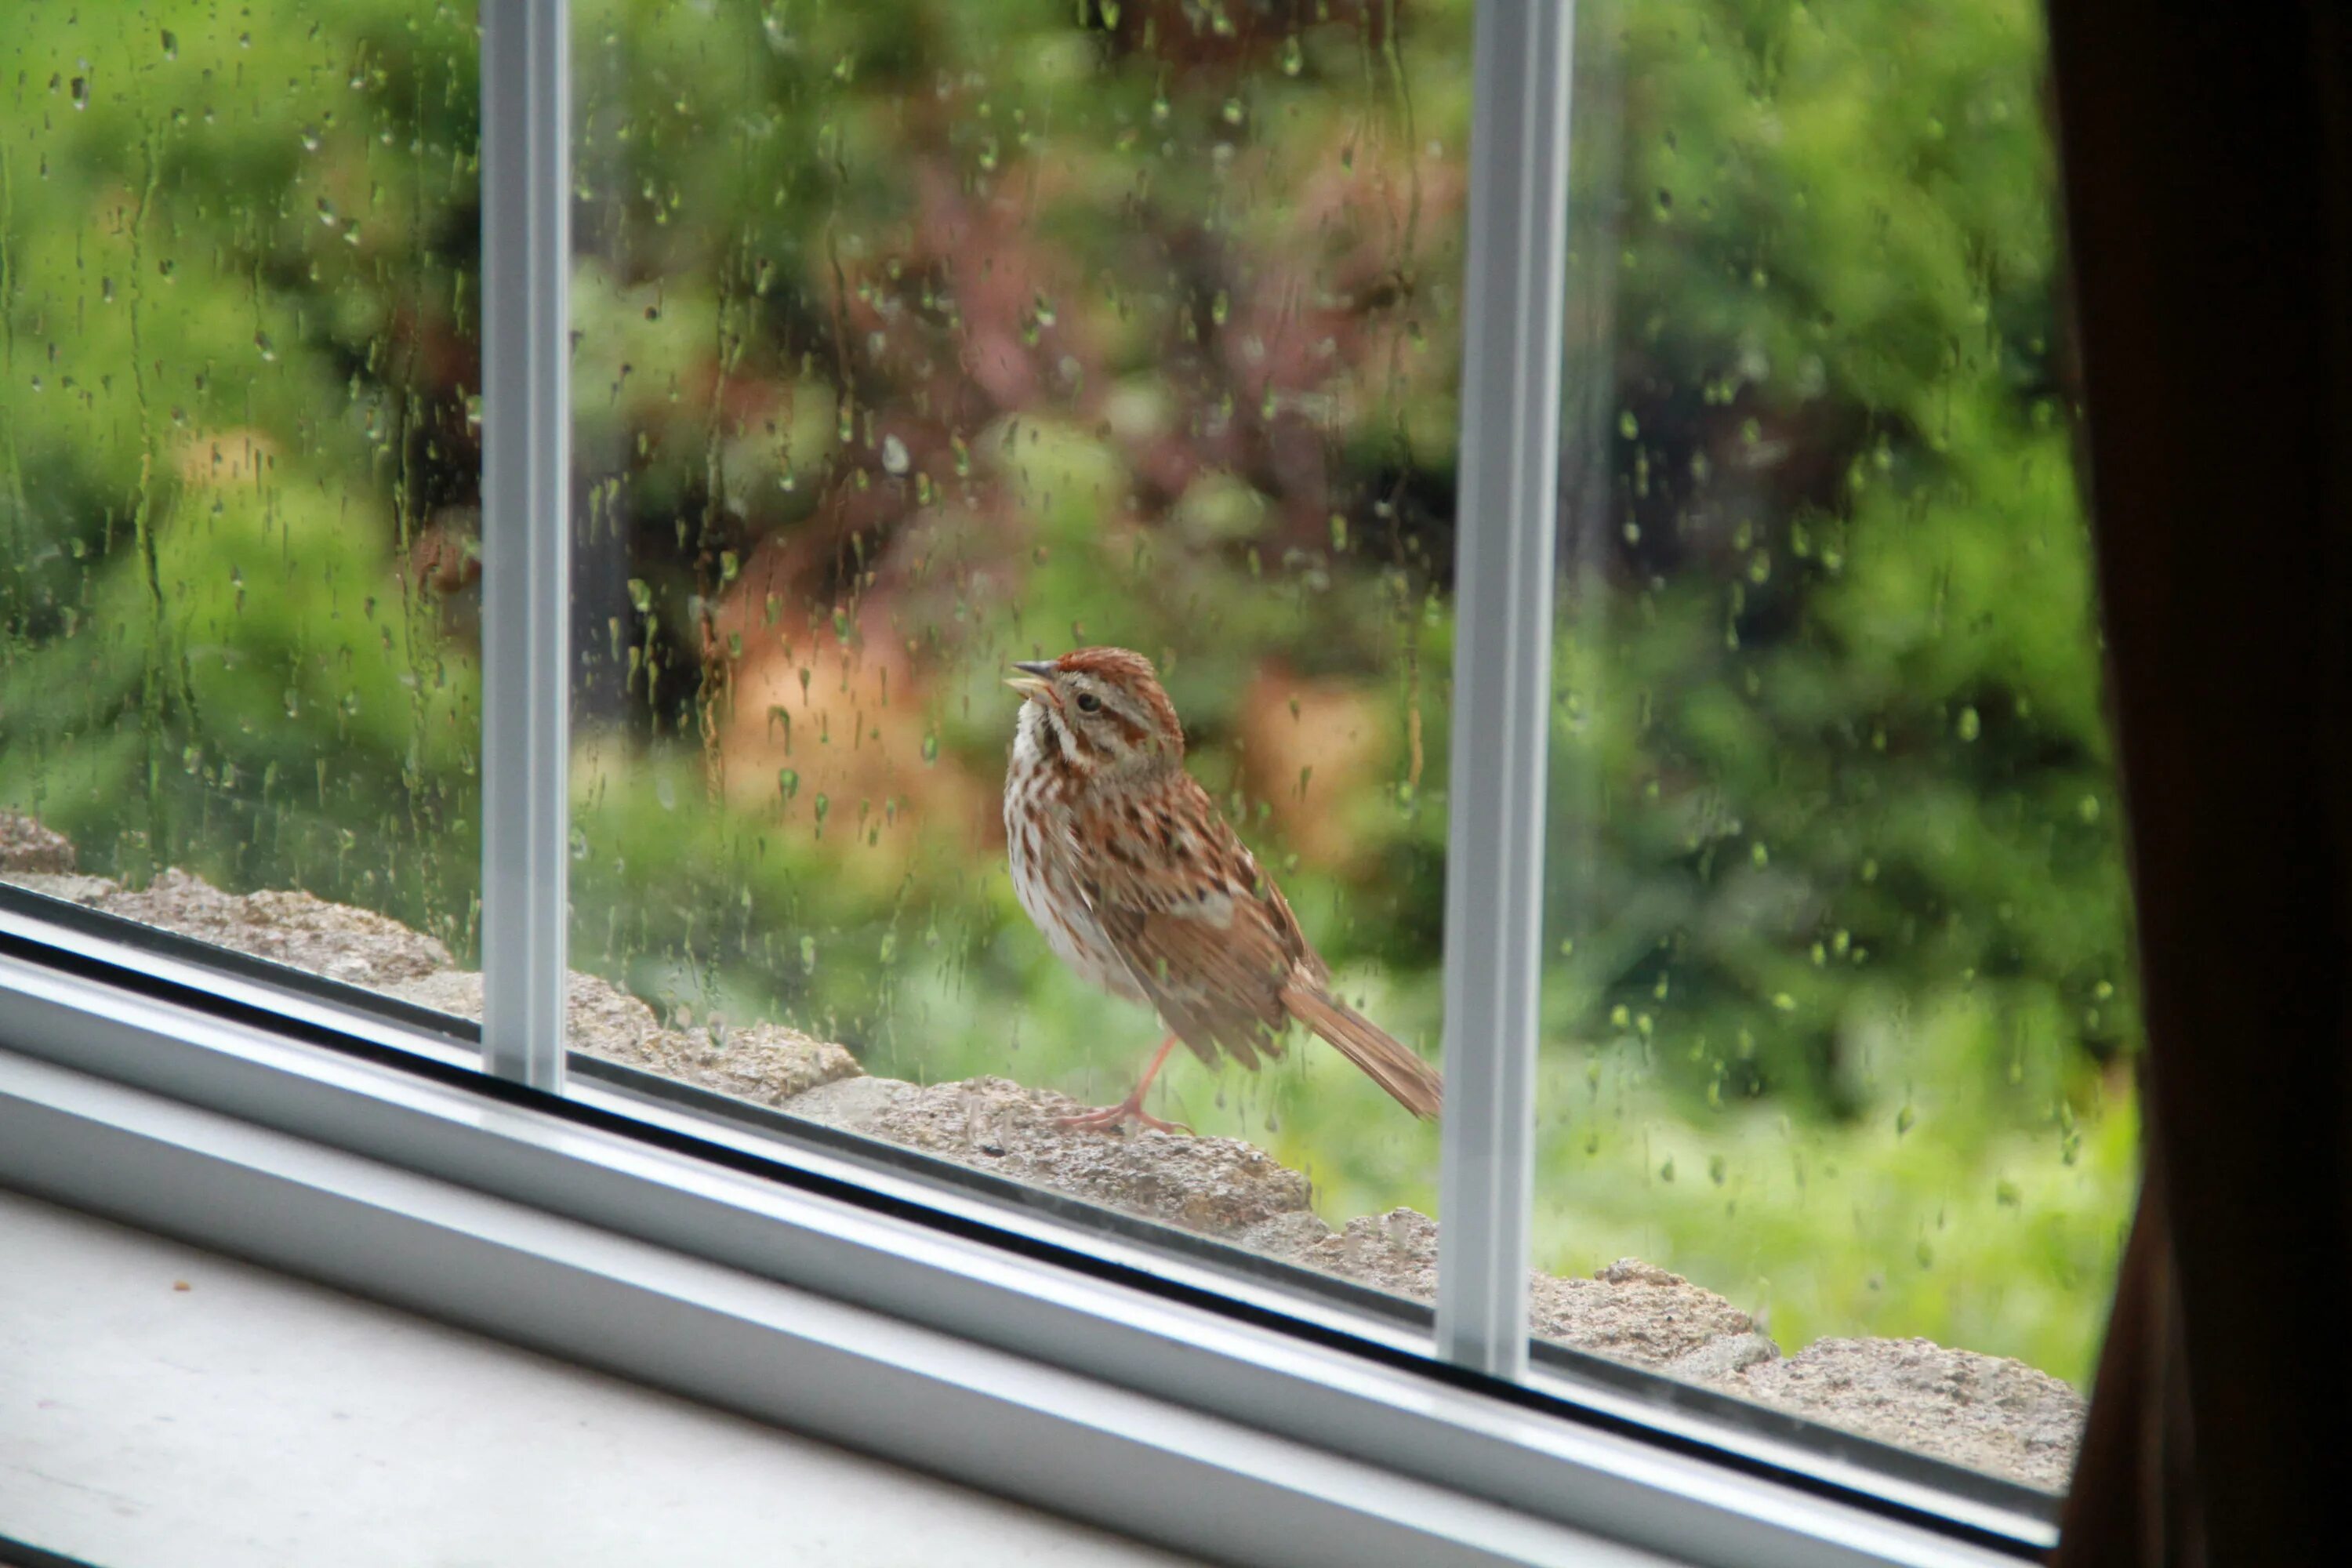 Сегодня у окошка чирикнул воробей. Воробей на подоконнике. Птички за окном. Птичка на подоконнике. Воробьи у окна.